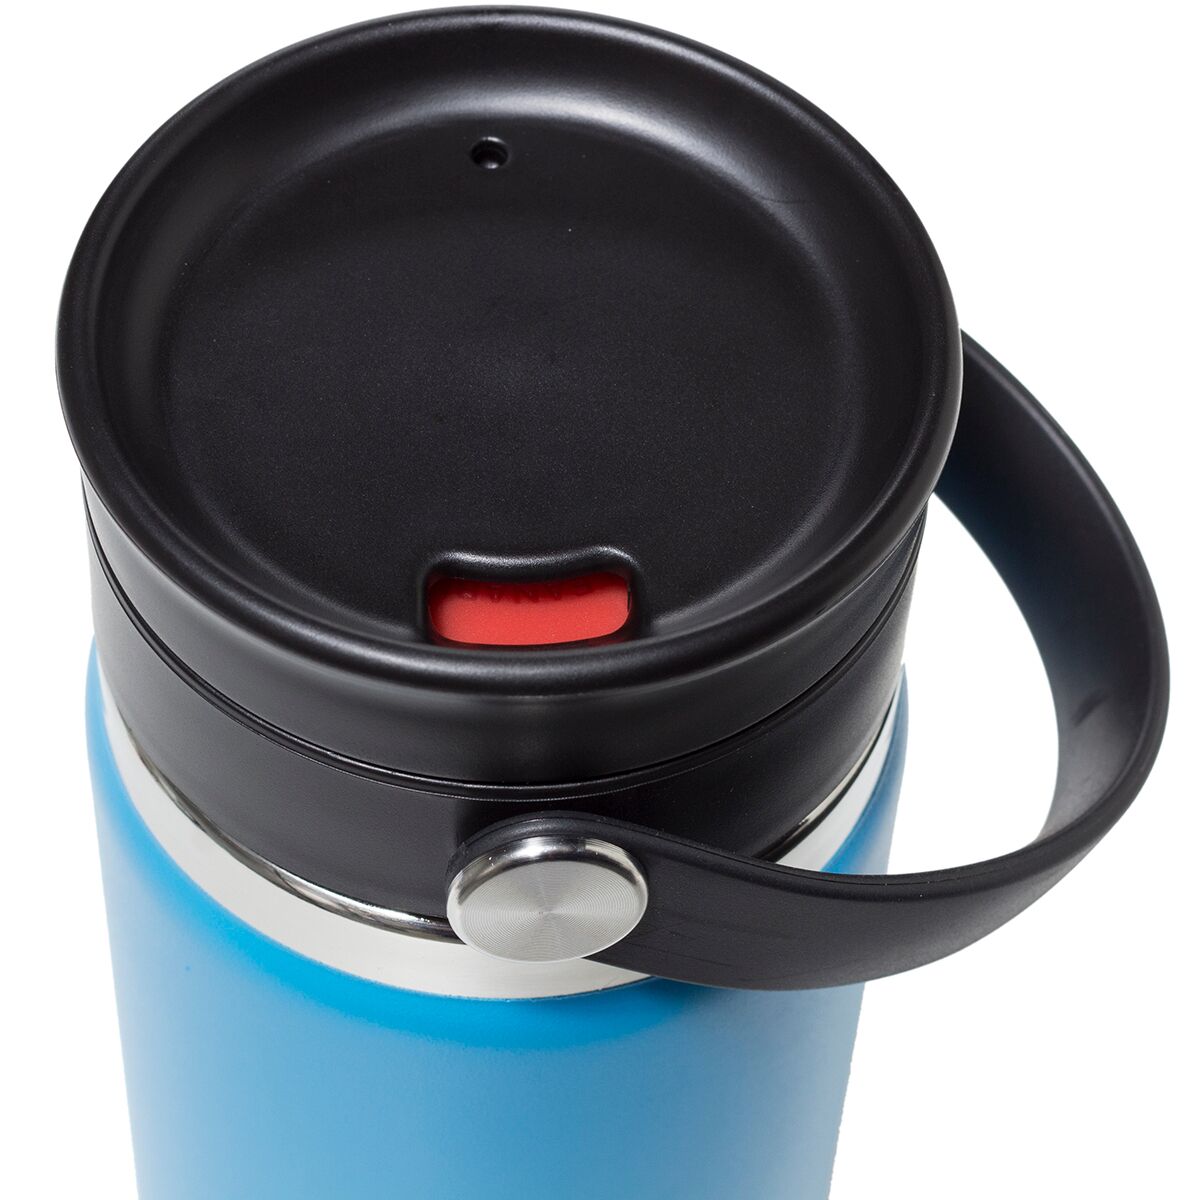 Hydro Flask thermal mug 16 Oz Wide Mouth Flex Sip Lid buy on PRM